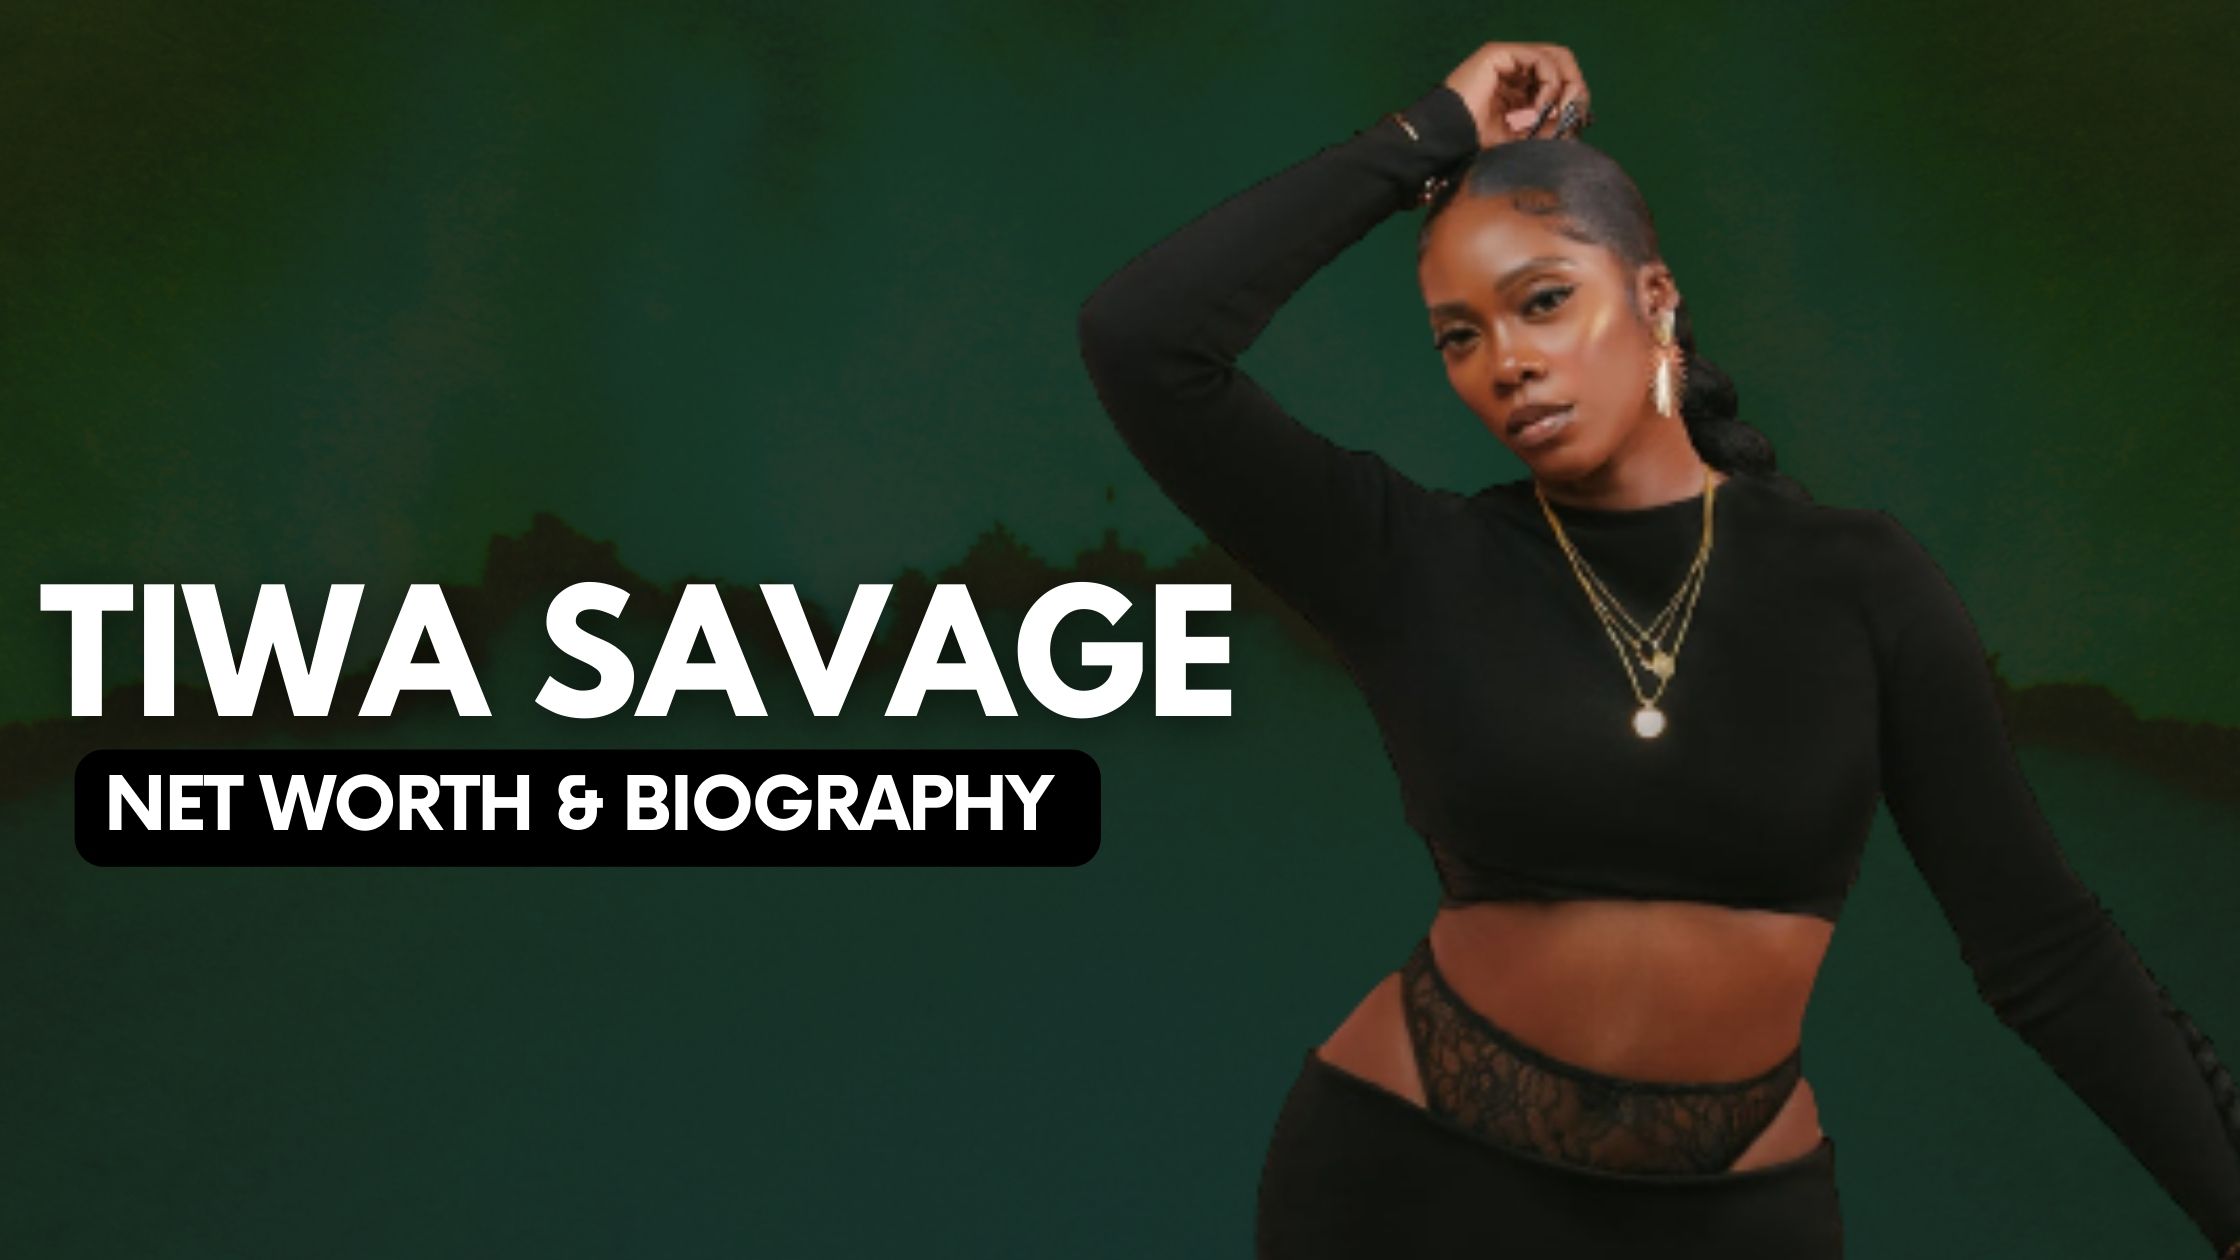 Tiwa Savage Net worth and Biography